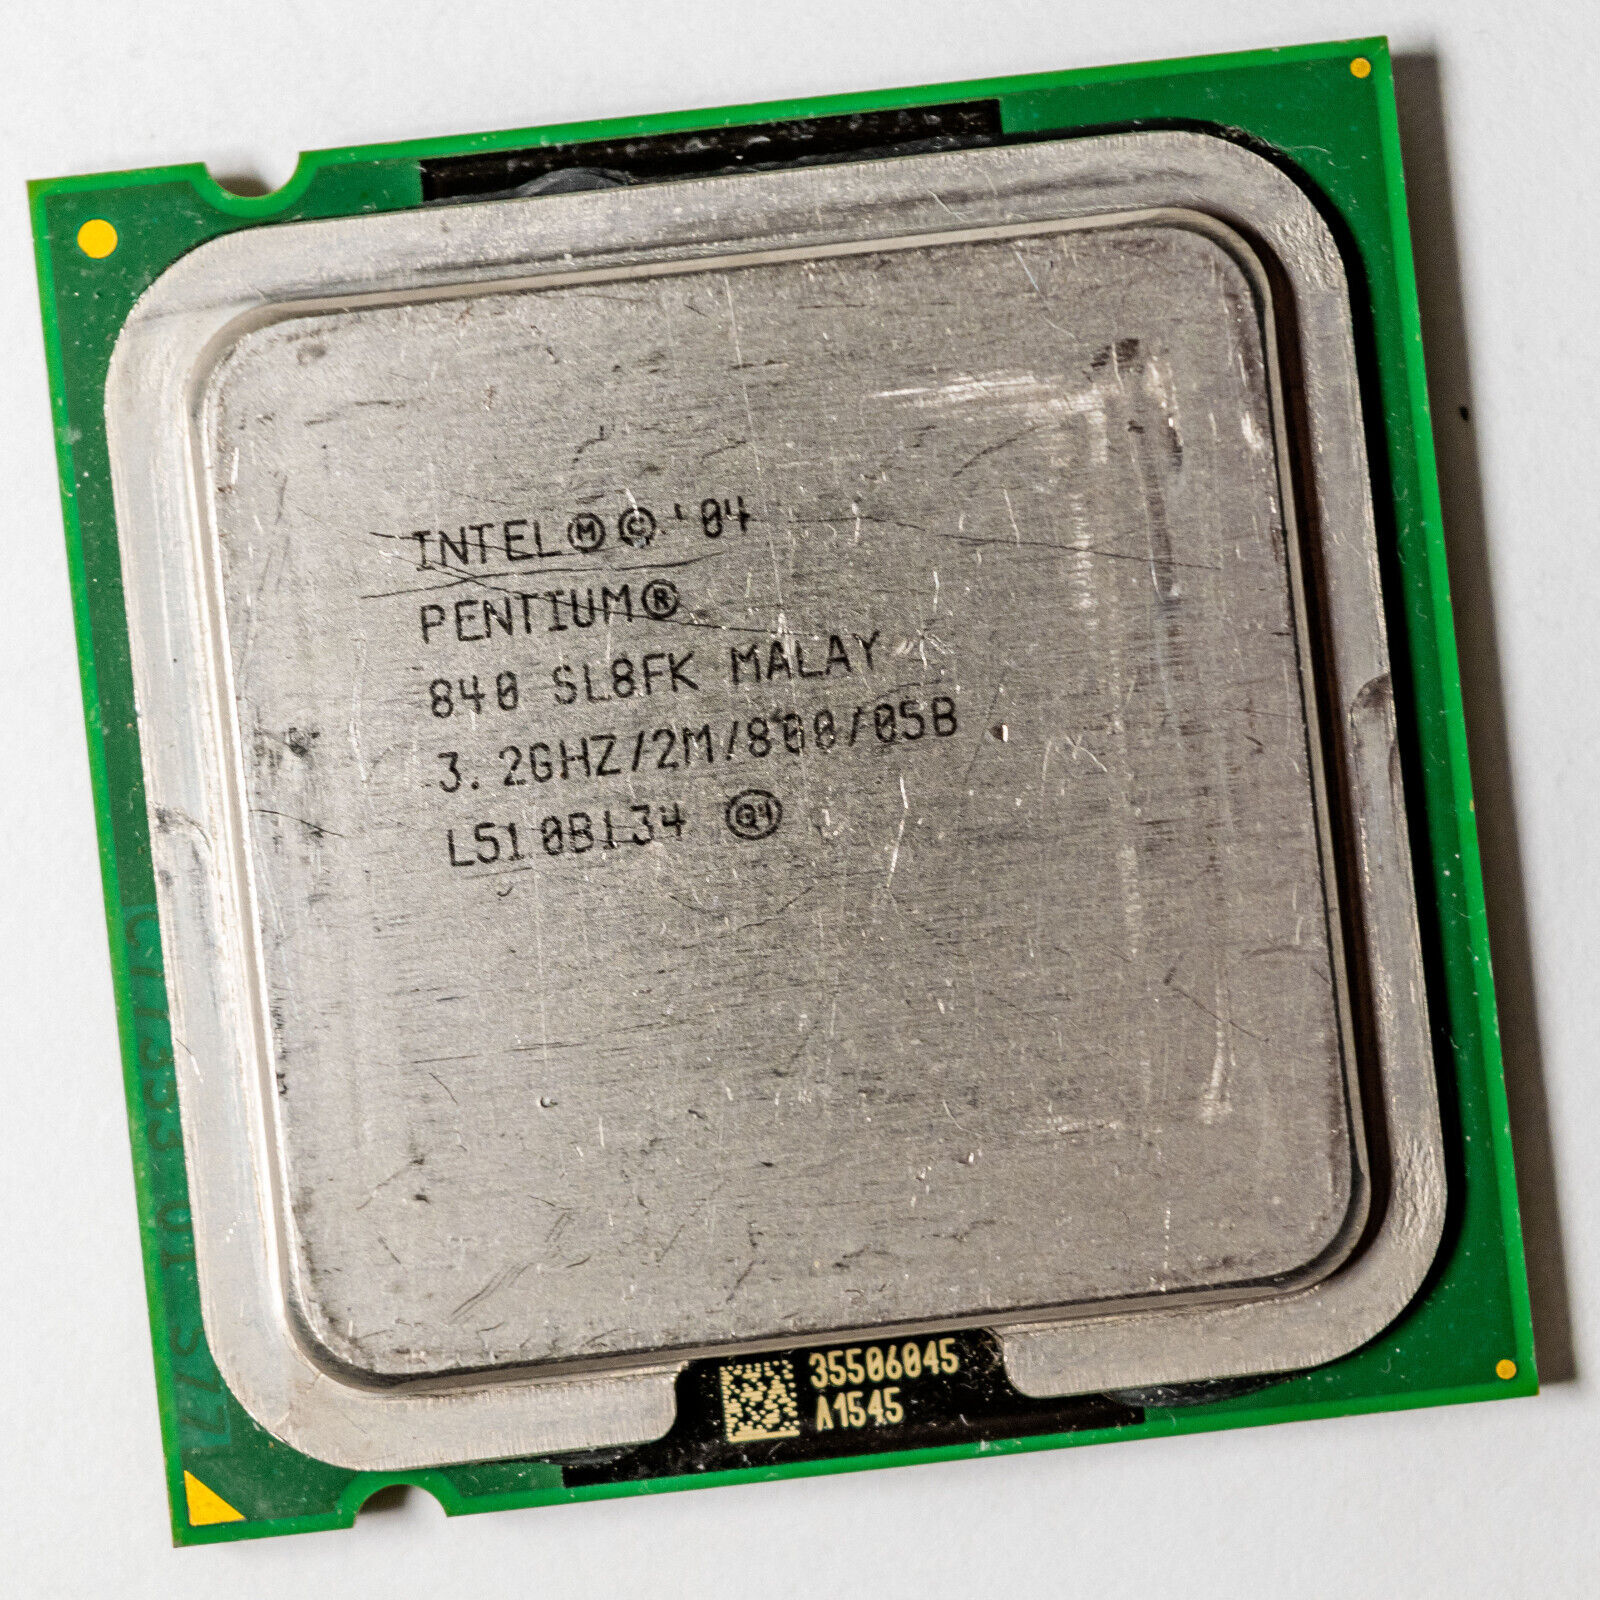 Intel Pentium D Extreme Edition 840 SL8FK 3.2GHz LGA775 Hyperthreaded CPU 130W